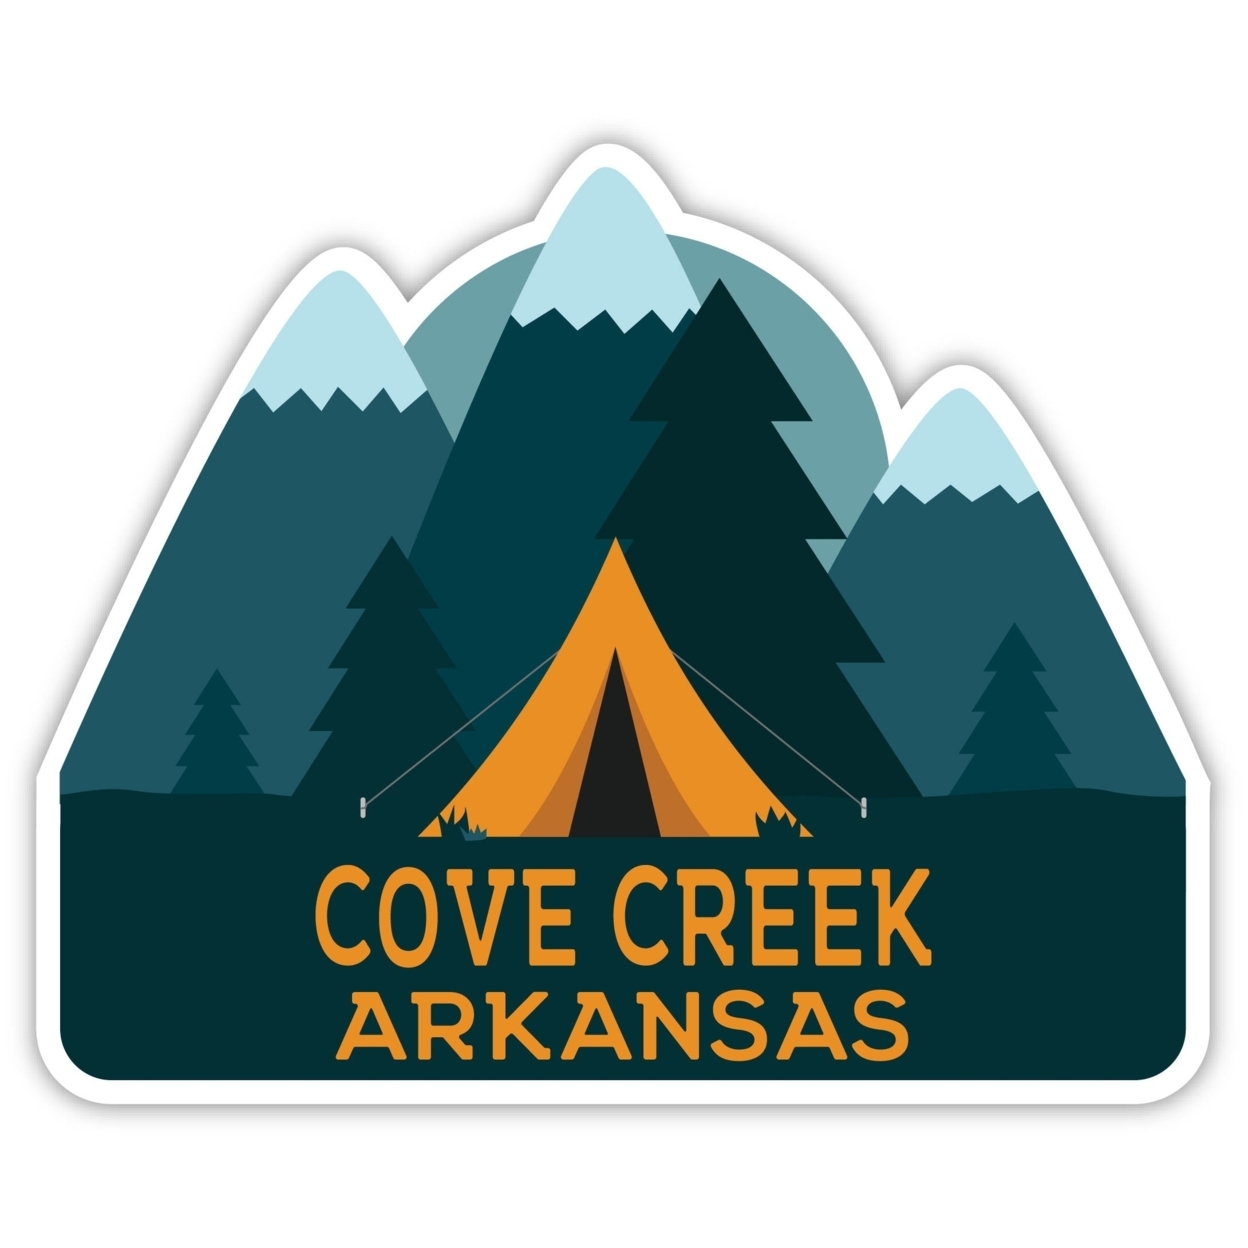 Cove Creek Arkansas Souvenir Decorative Stickers (Choose Theme And Size) - 4-Pack, 4-Inch, Tent